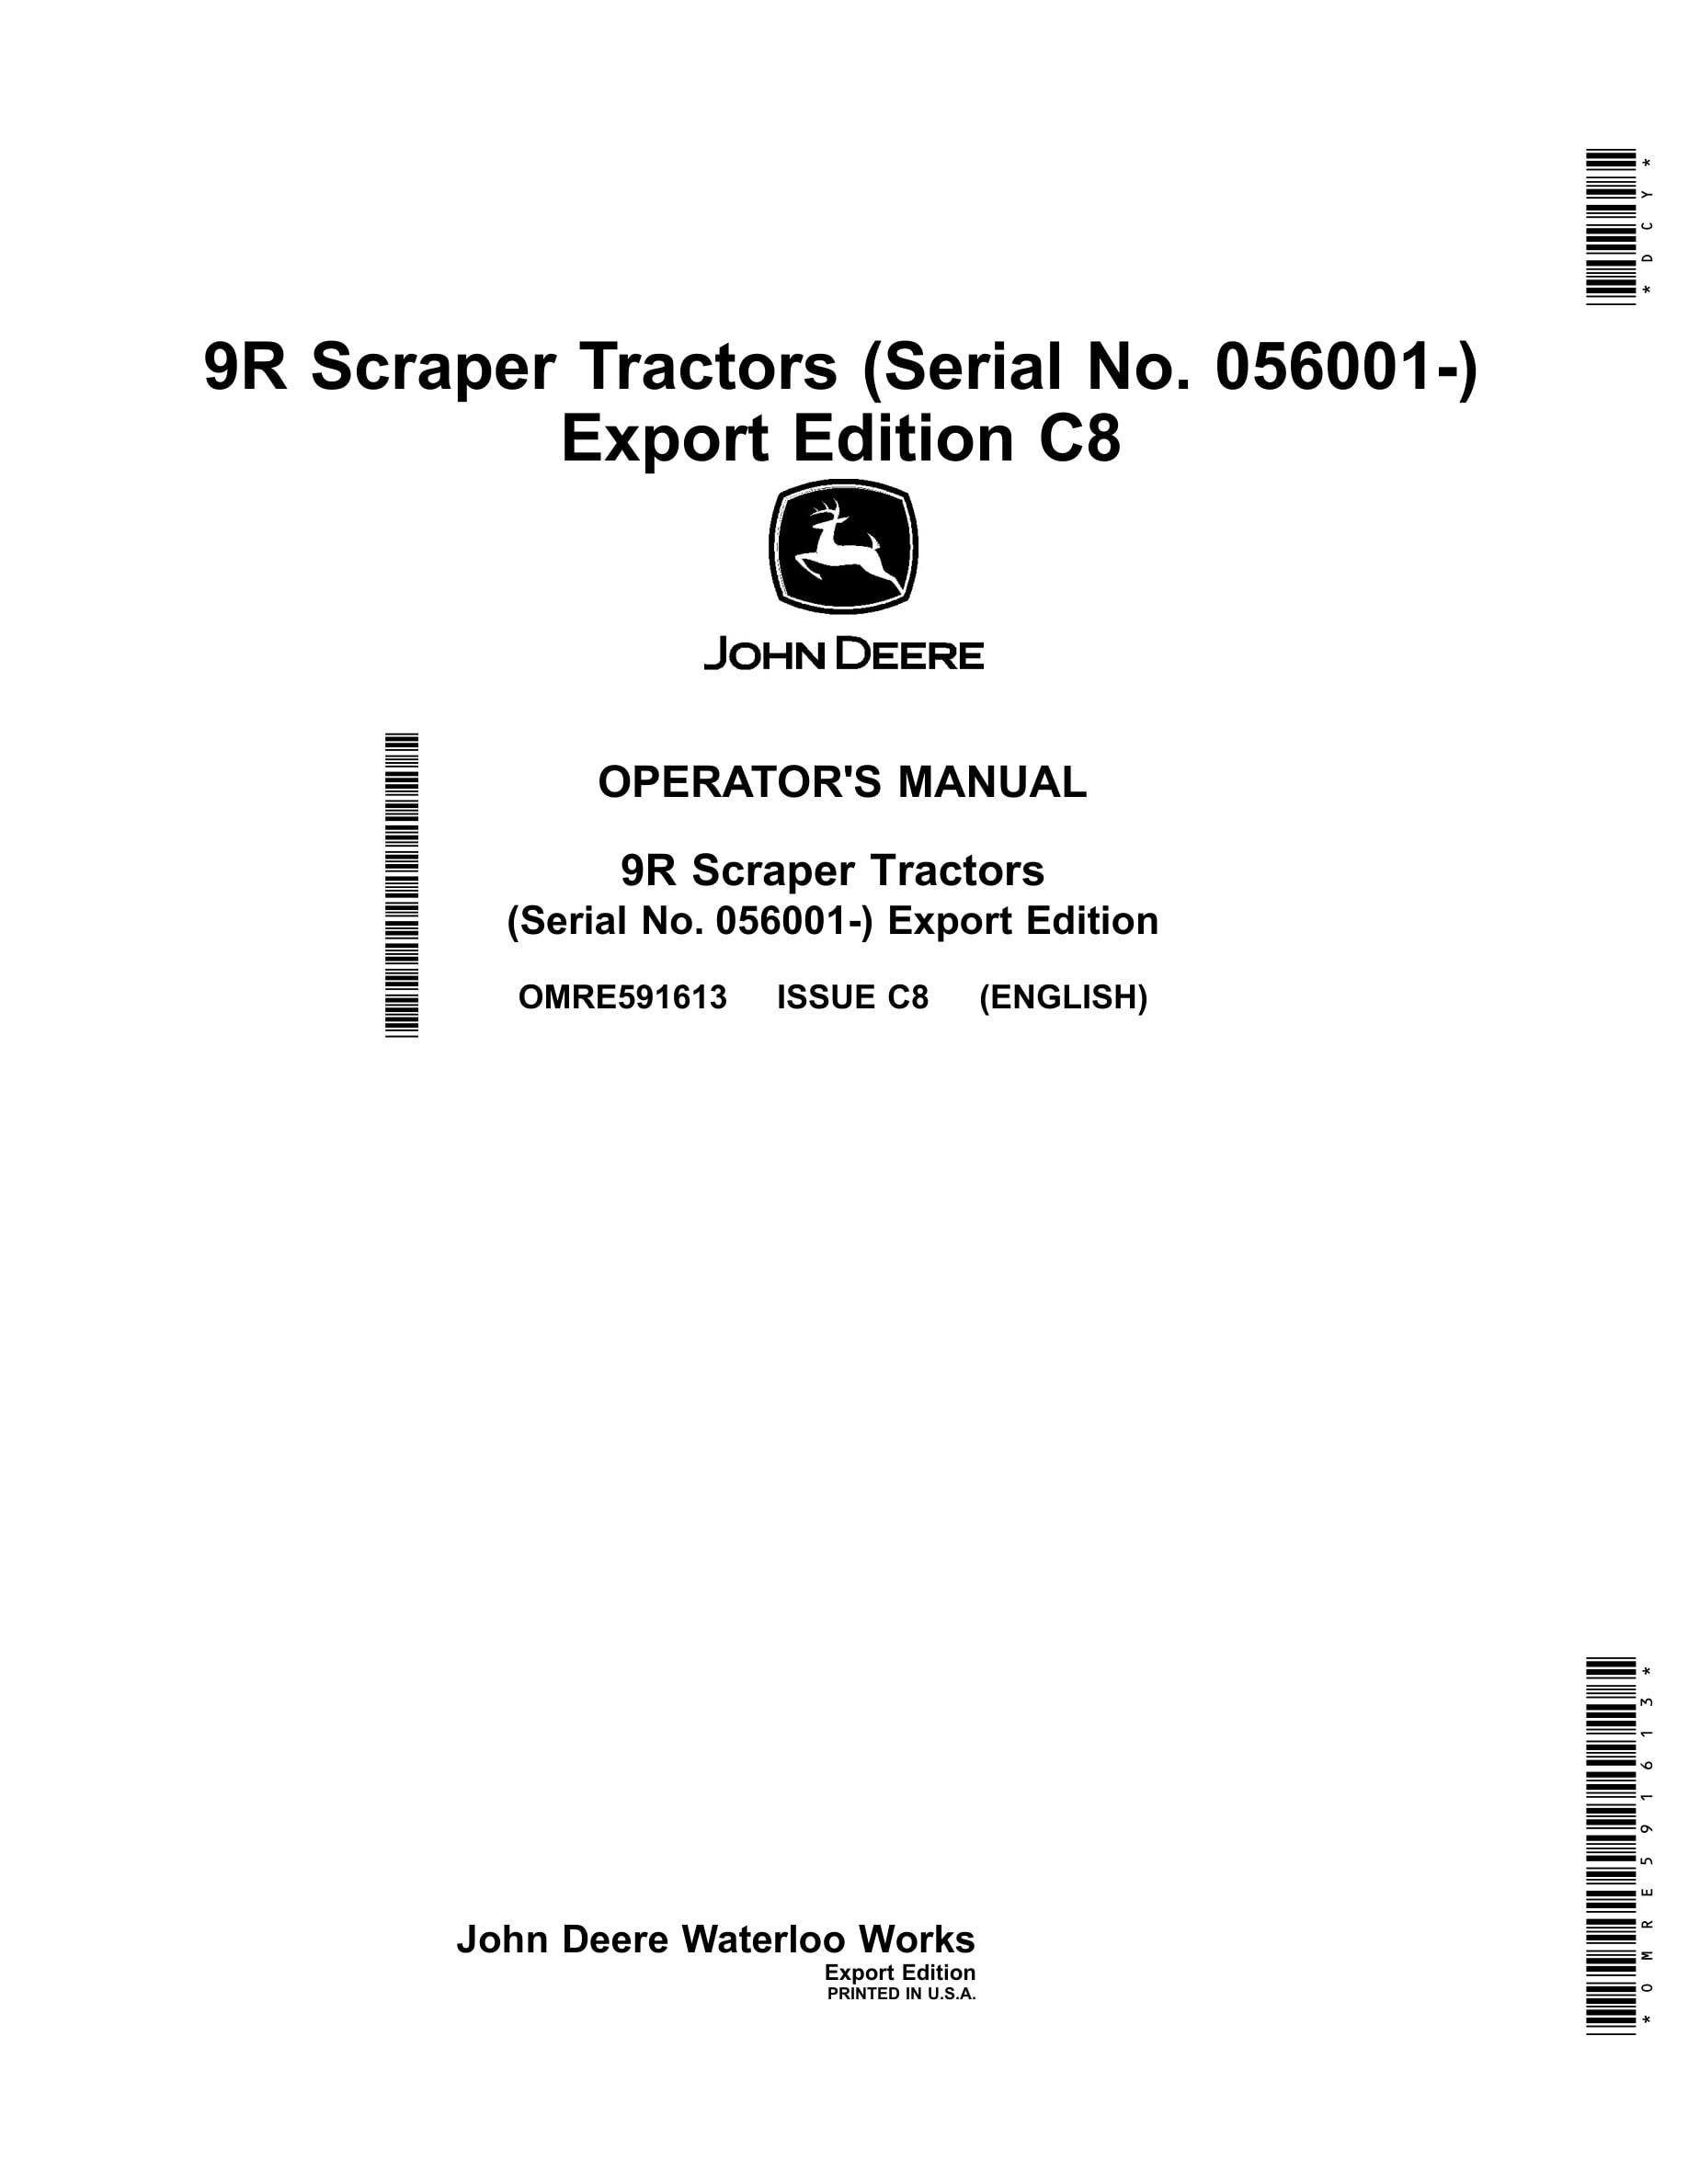 John Deere 9r Scraper Tractors Operator Manuals OMRE591613-1